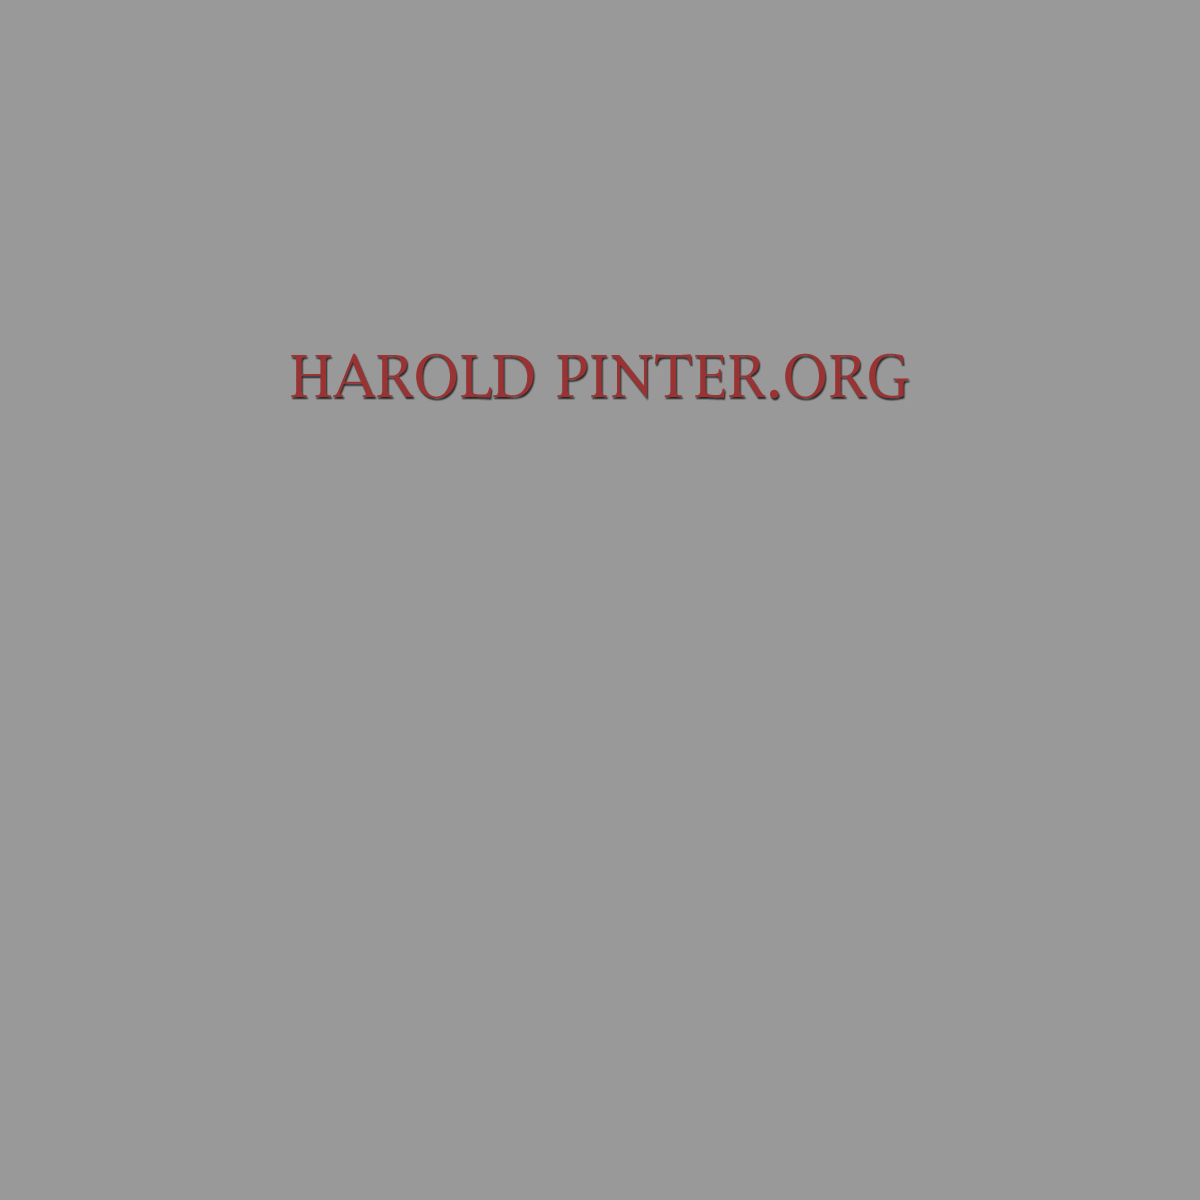 A complete backup of haroldpinter.org